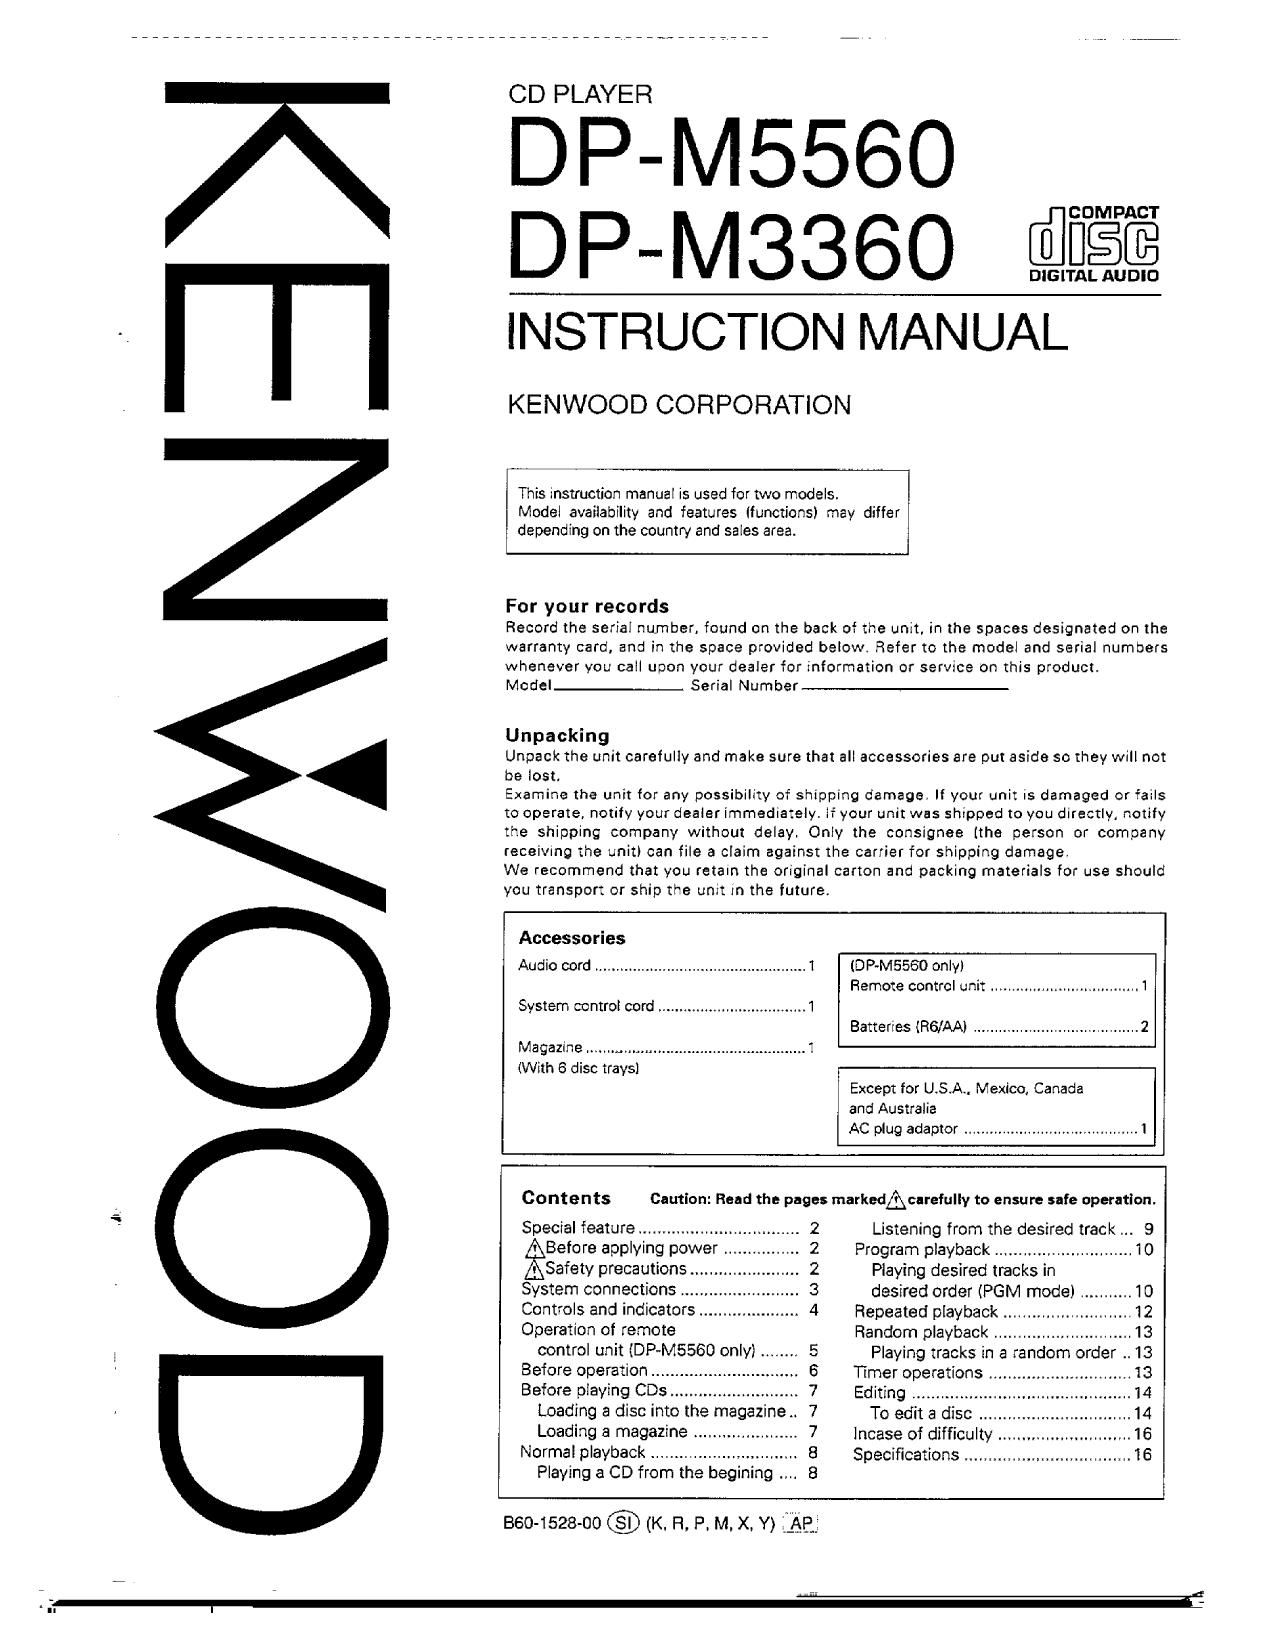 Kenwood DPM 3360 Owners Manual